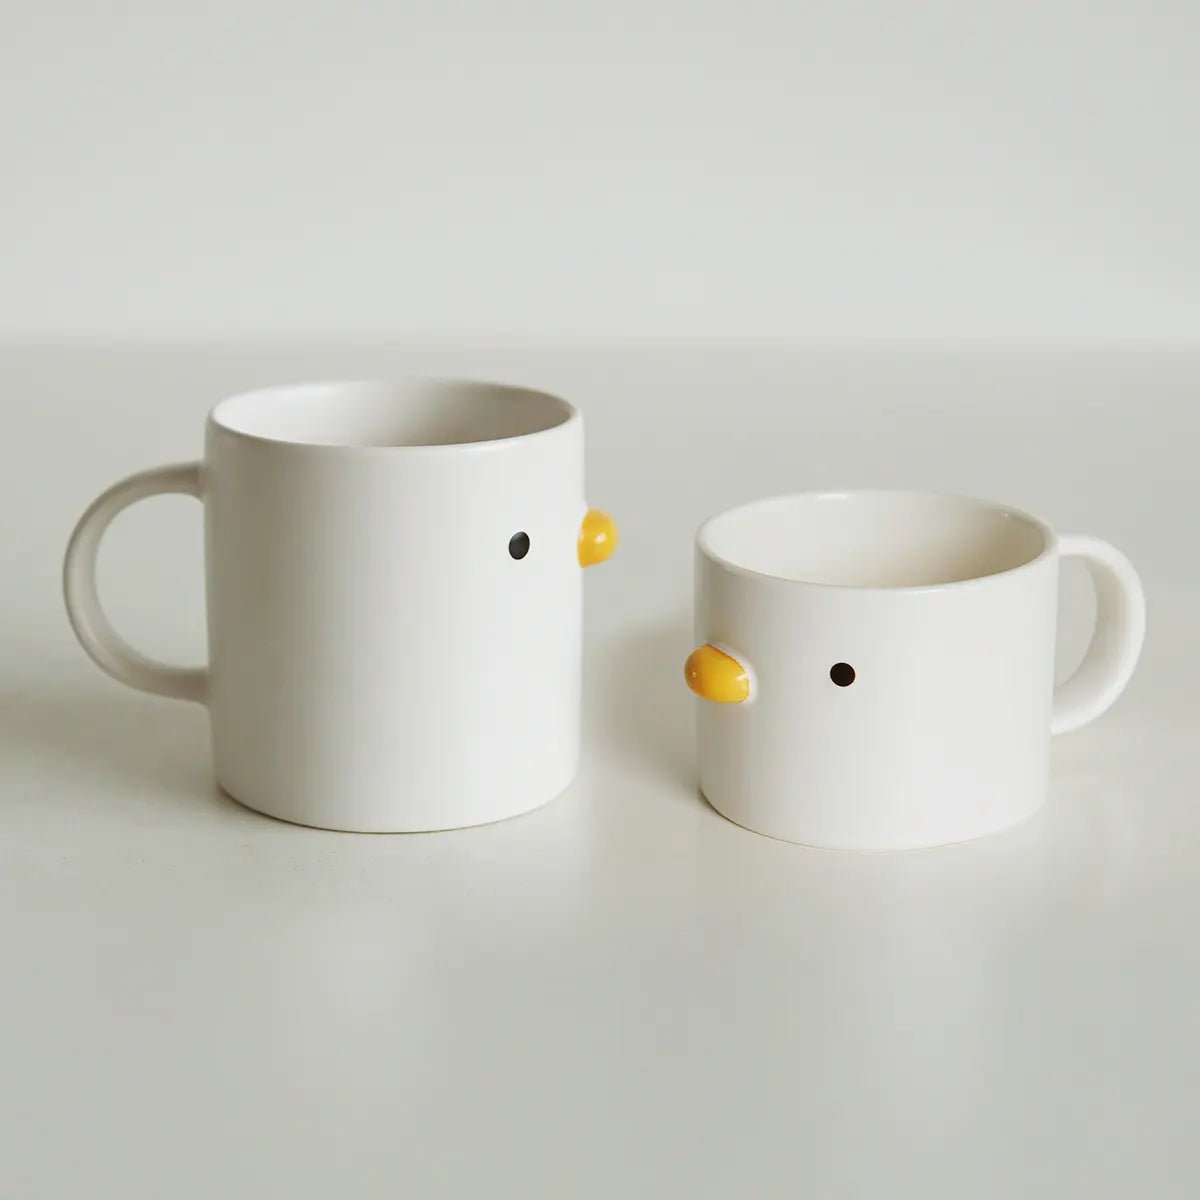 Benson The Duck Coffee Mug Safety Ceramic Milk Latte MugsBenson The Duck Coffee Mug Safety Ceramic Milk Latte Mugs